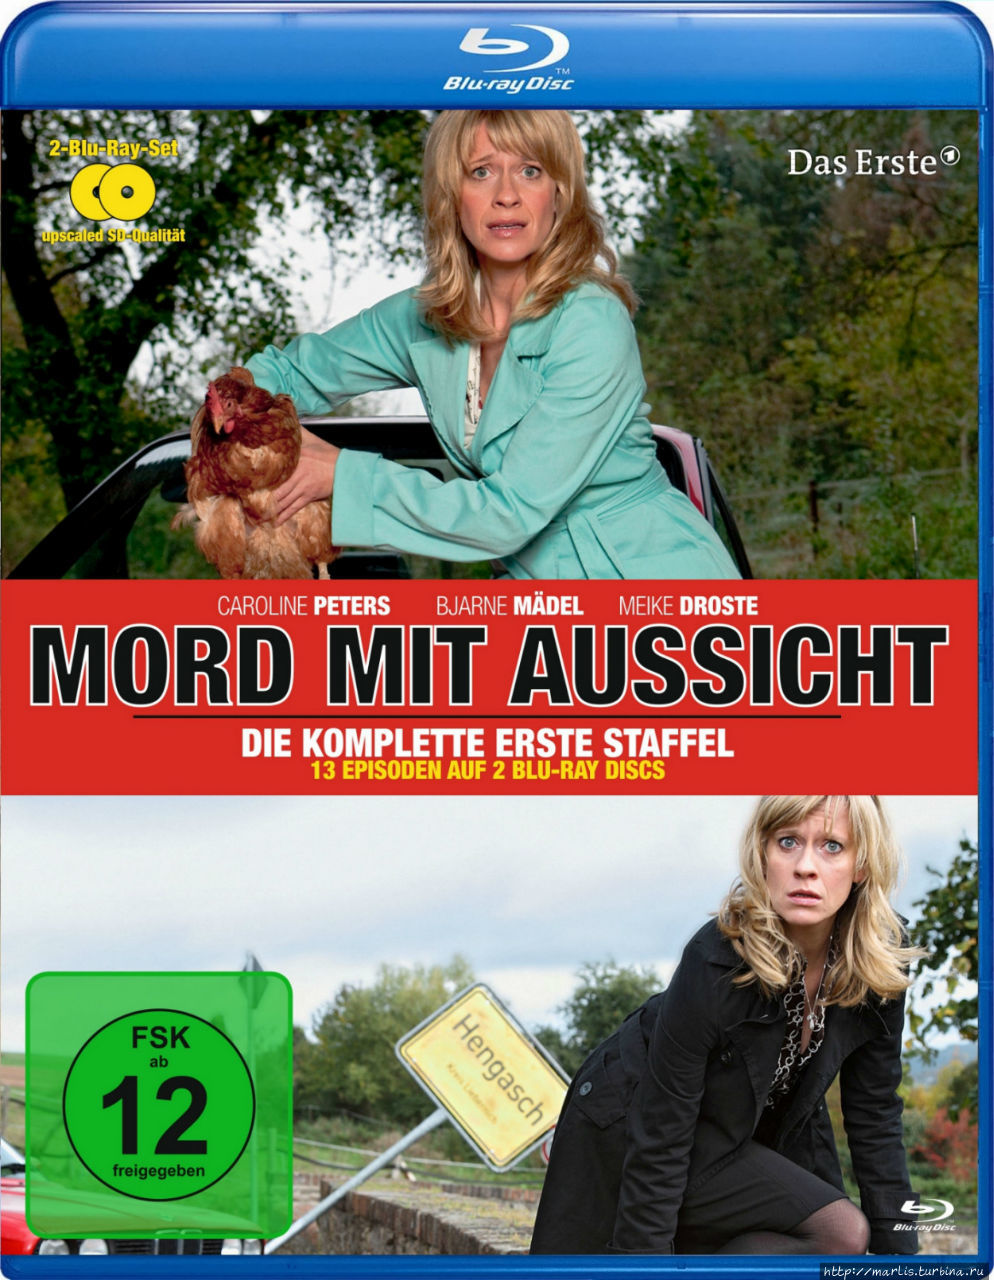 Детективно-юмористический сериал Убийство с перспективой произвосдтвa ZDF. фото из интернета Мария-Лаах, Германия